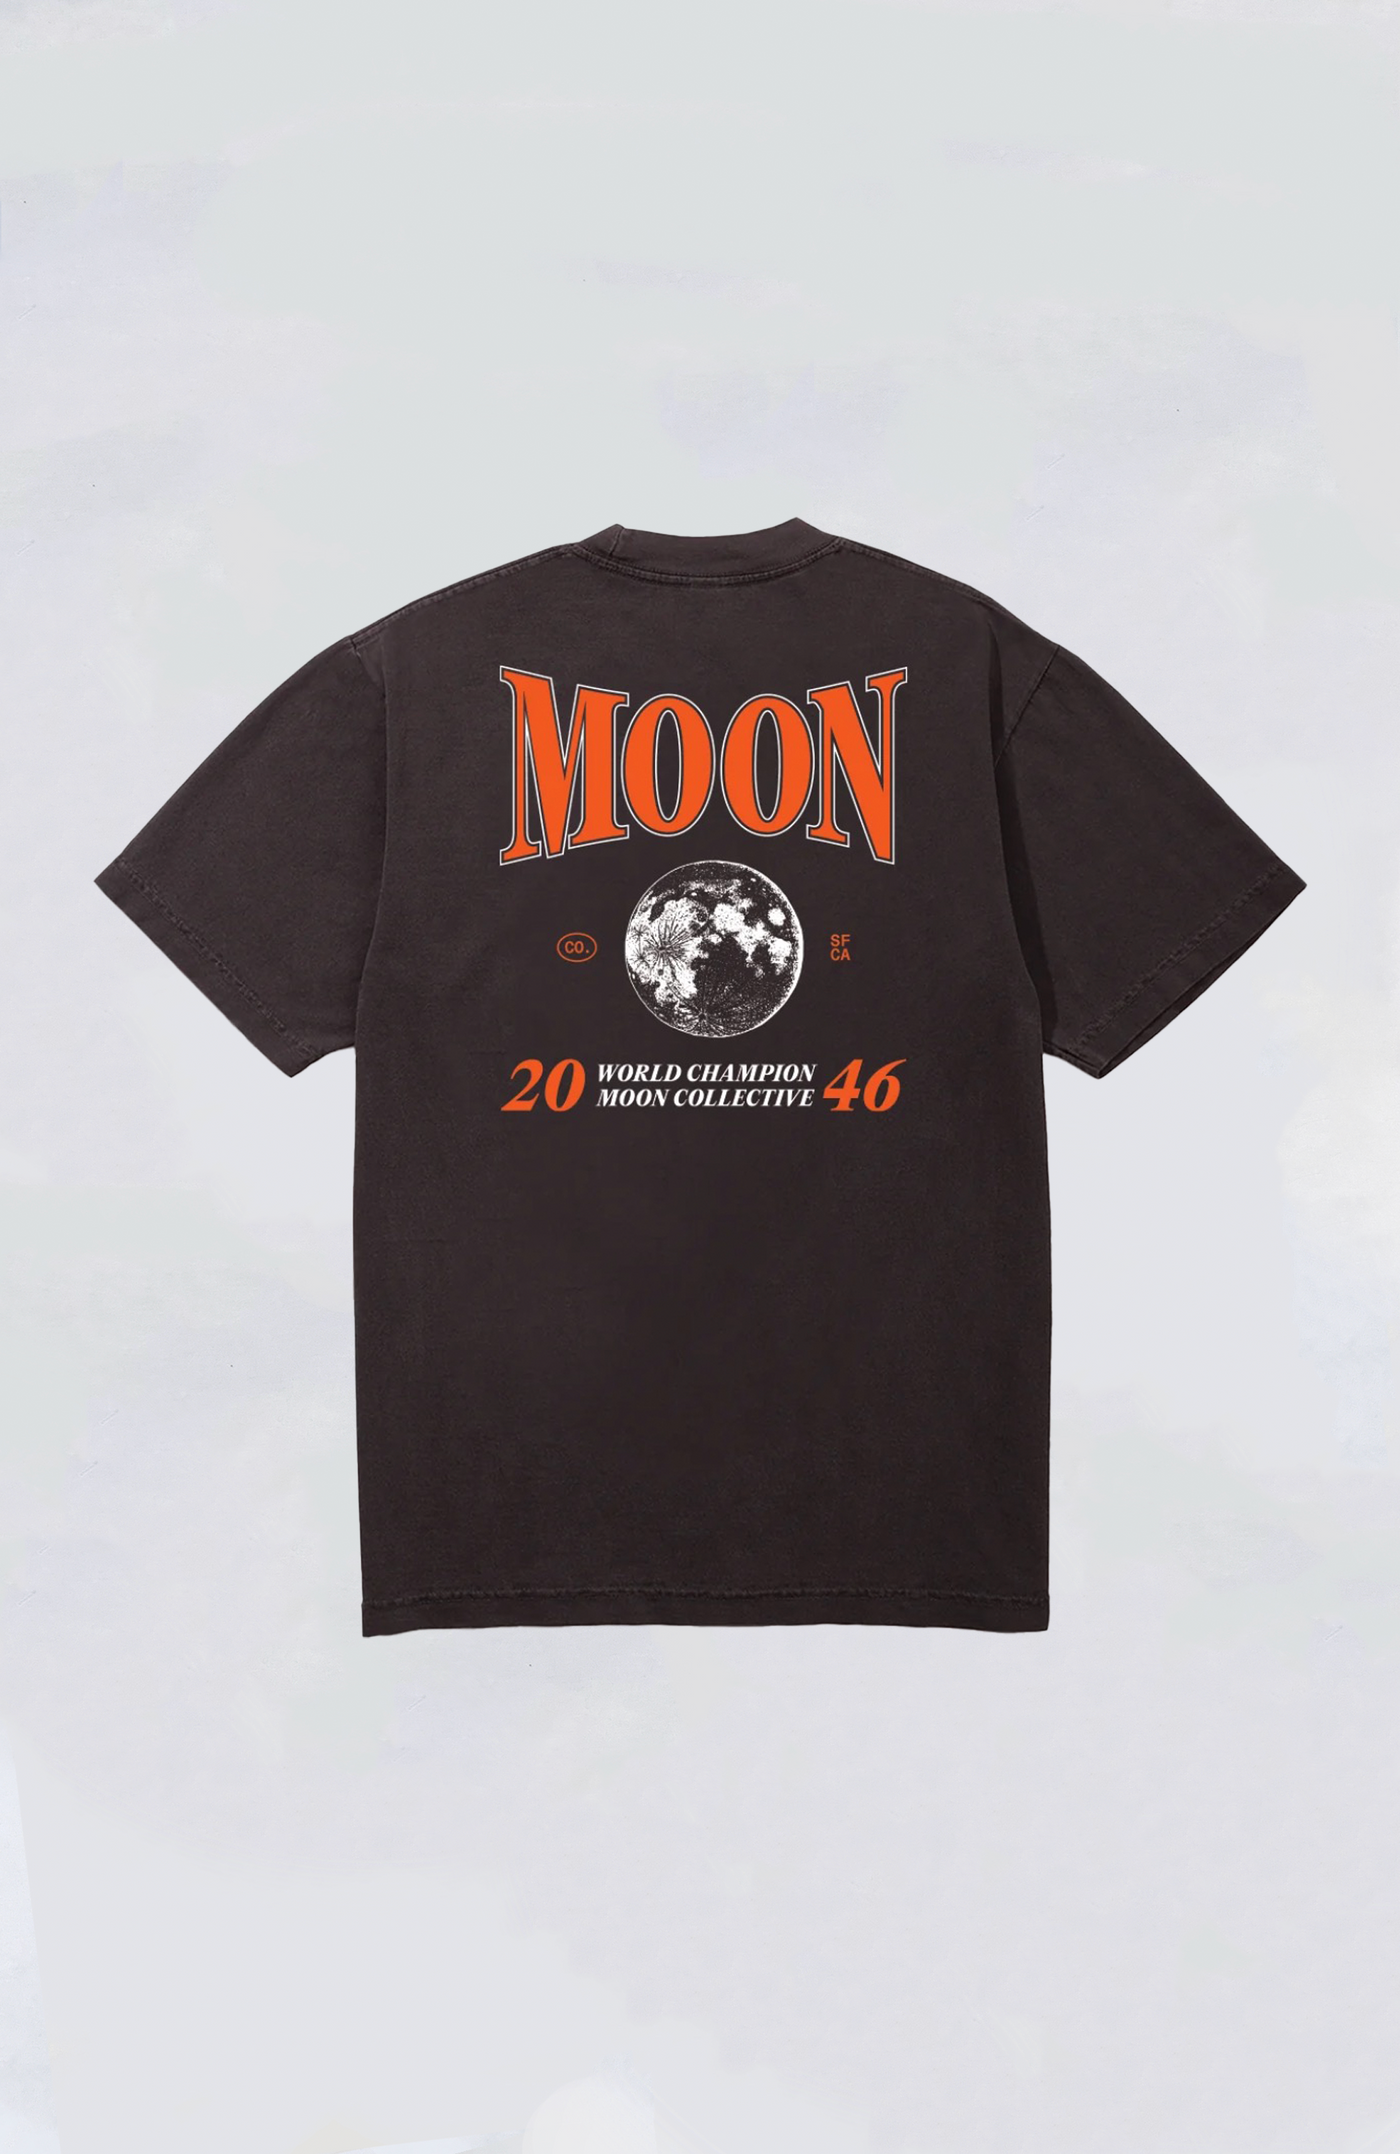 Moon Collective - World Champions Tee